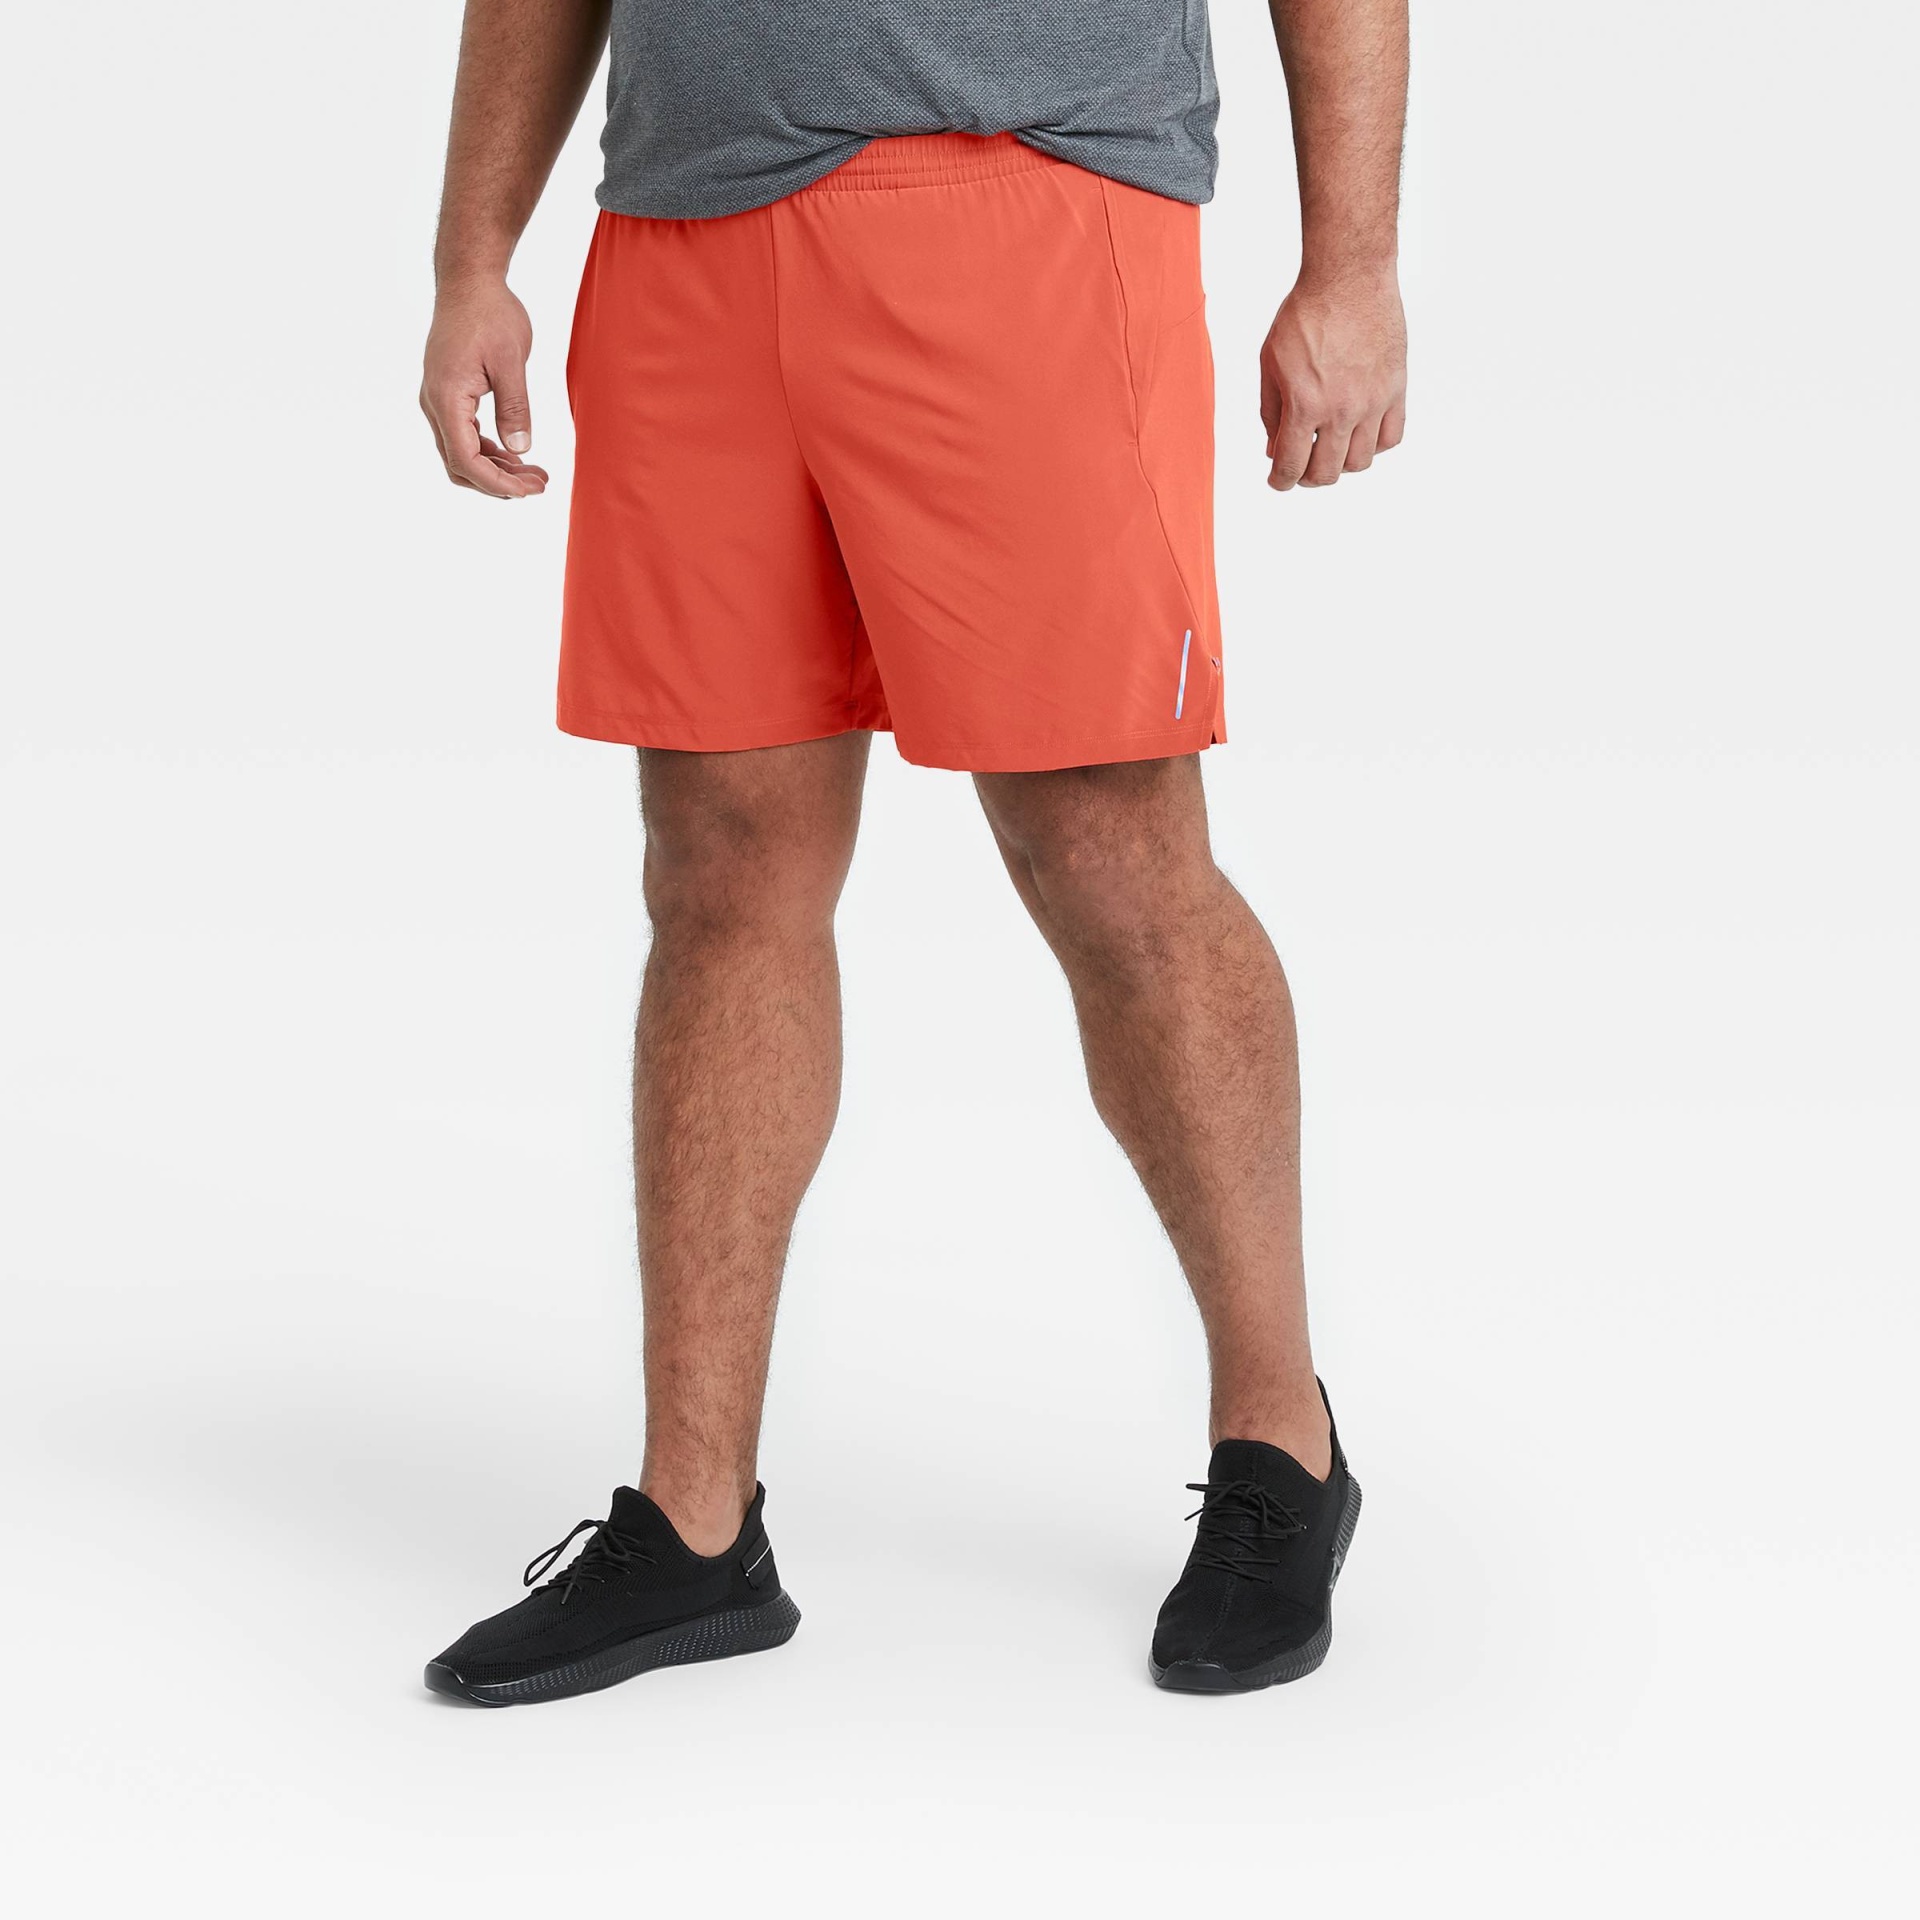 Nike Men's Shorts - Red - L